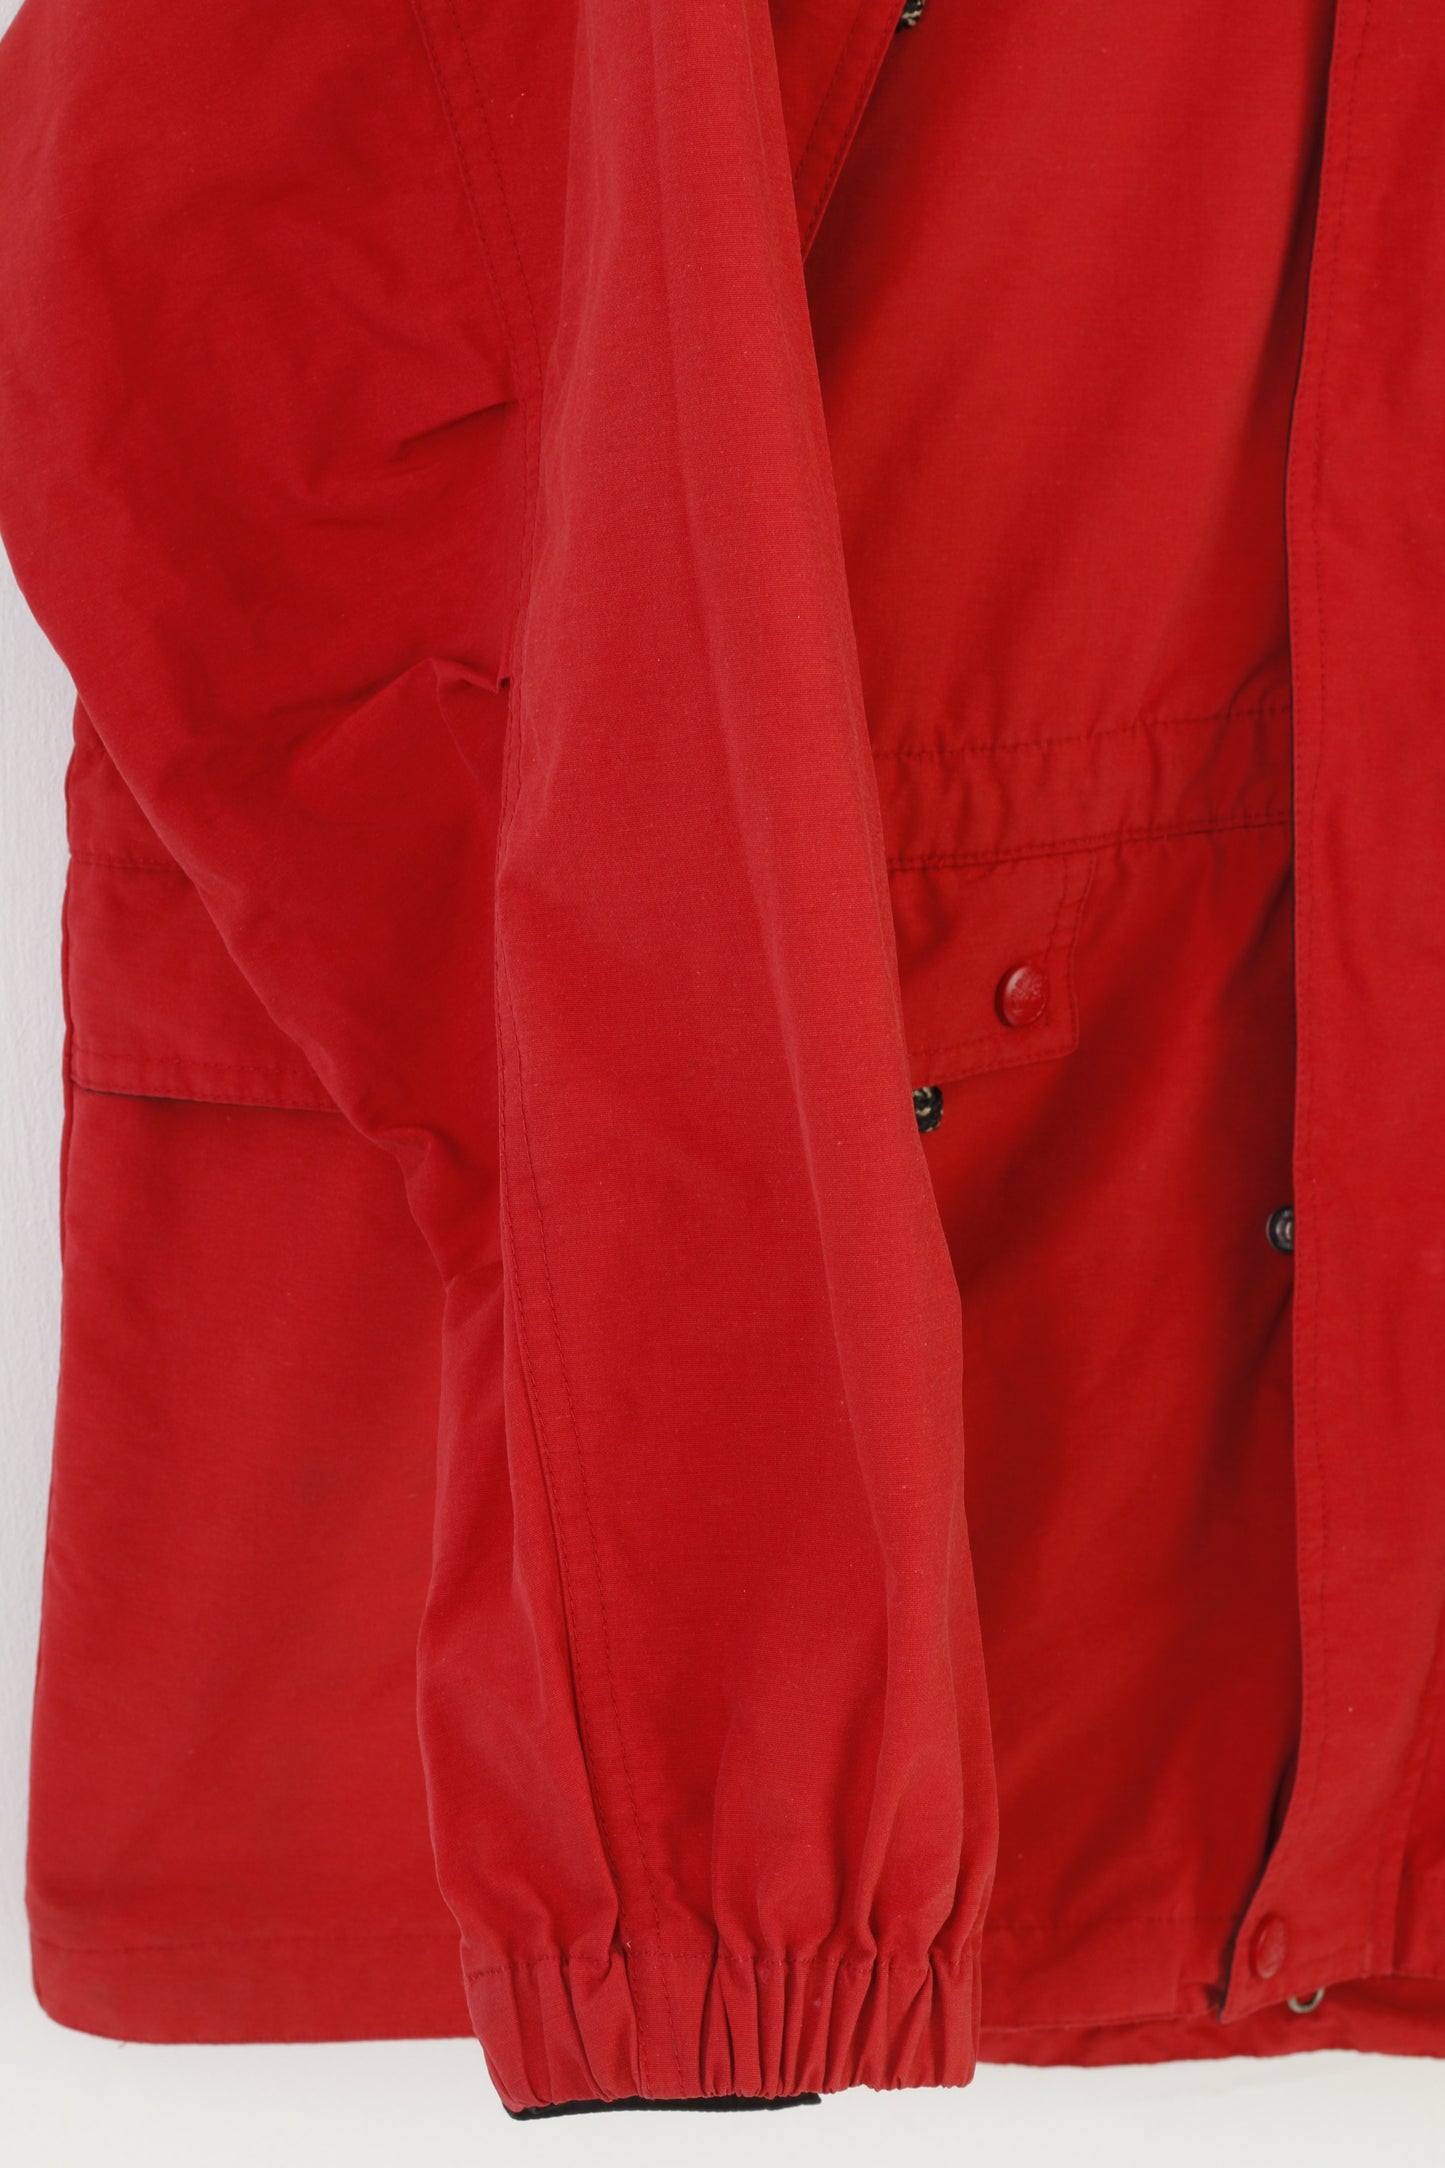 Timberland Men L Jacket Red Full Zipper Vintage Hood Outwear Cotton Nylon Pockets Top